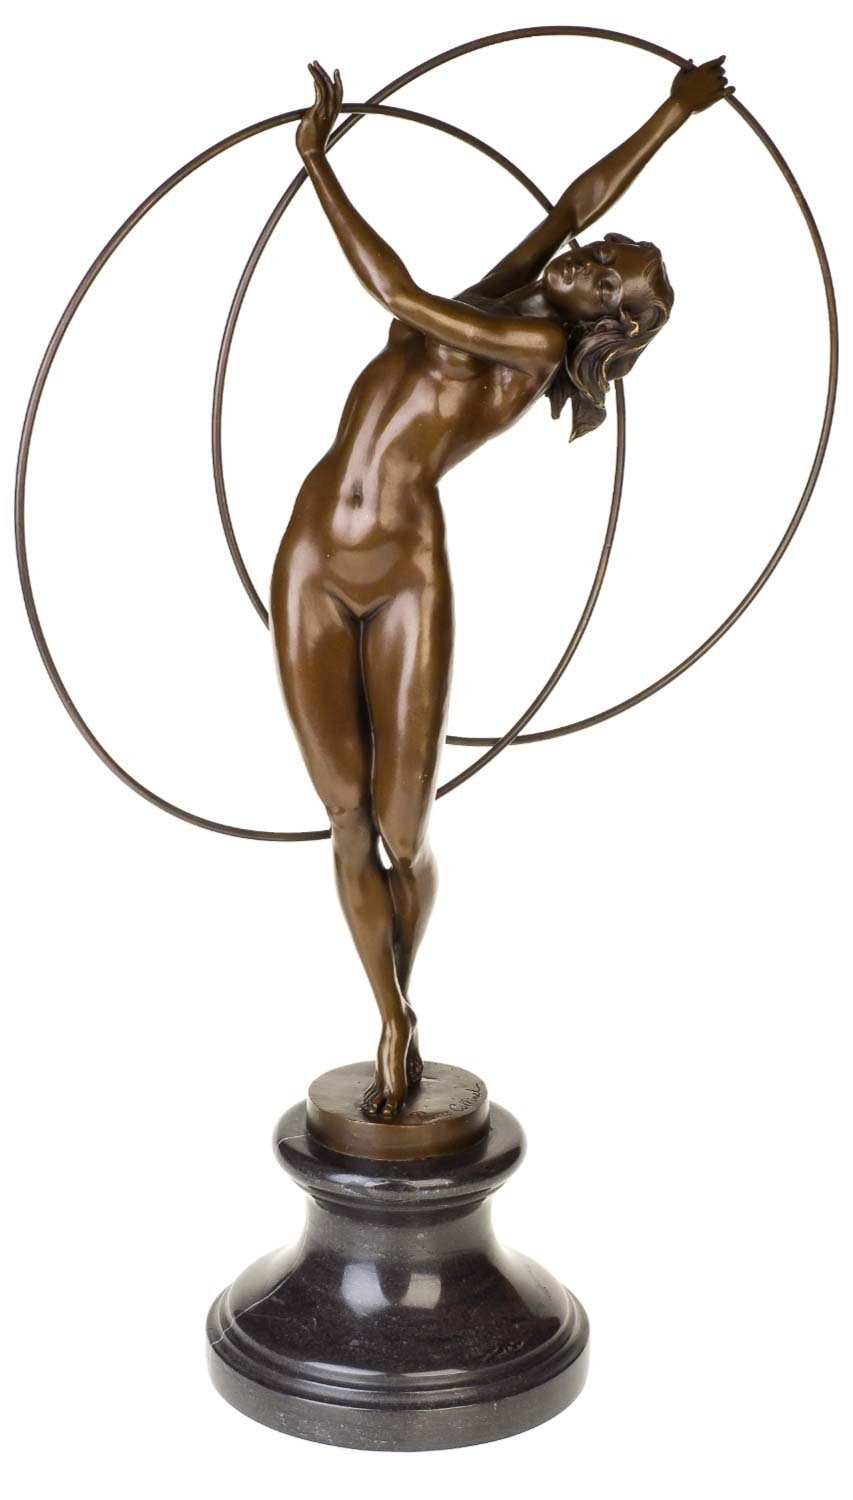 Aubaho Skulptur Bronzeskulptur erotische Kunst Reif Erotik Antik-Stil Bronze Figur Sta